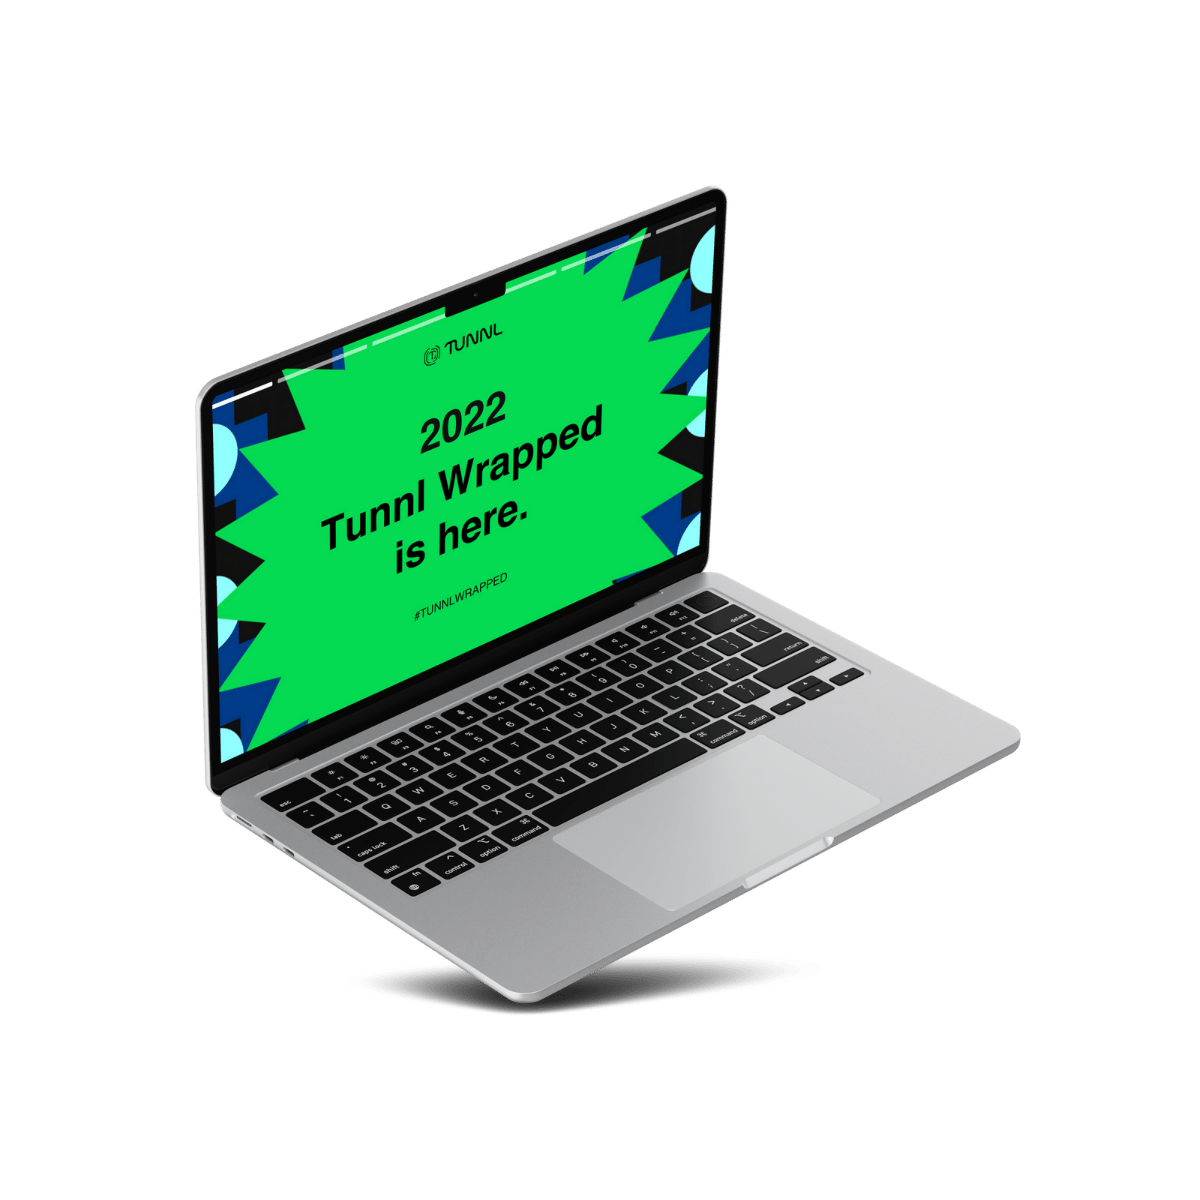 Tunnl Wrapped 2022 laptop